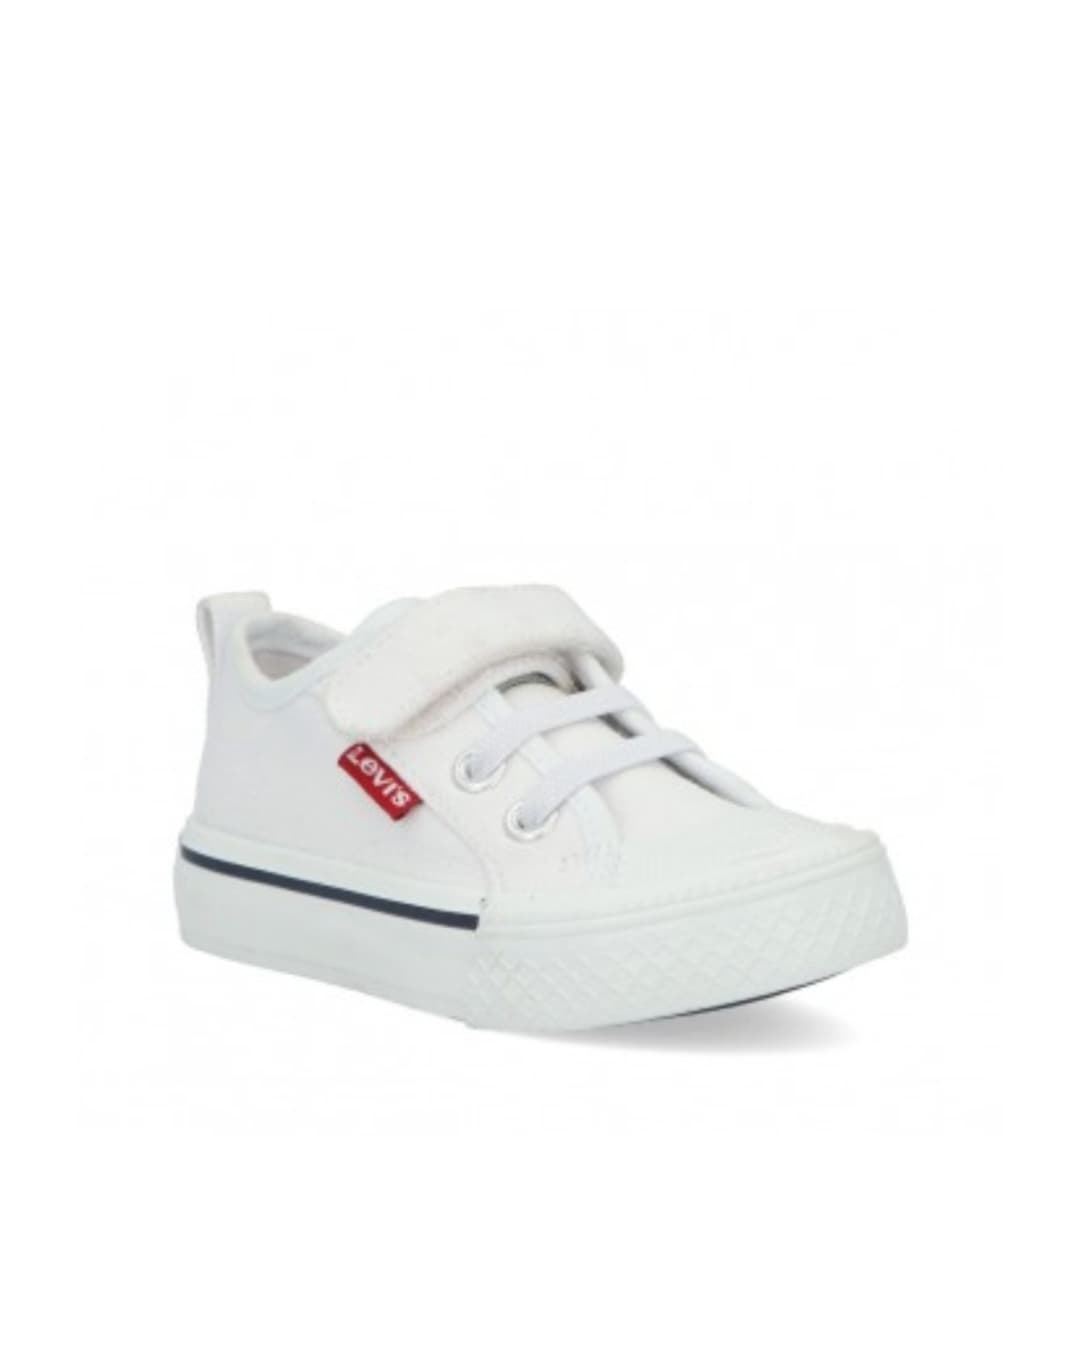 Levi's Unisex White Canvas Sneakers Kids - Image 2